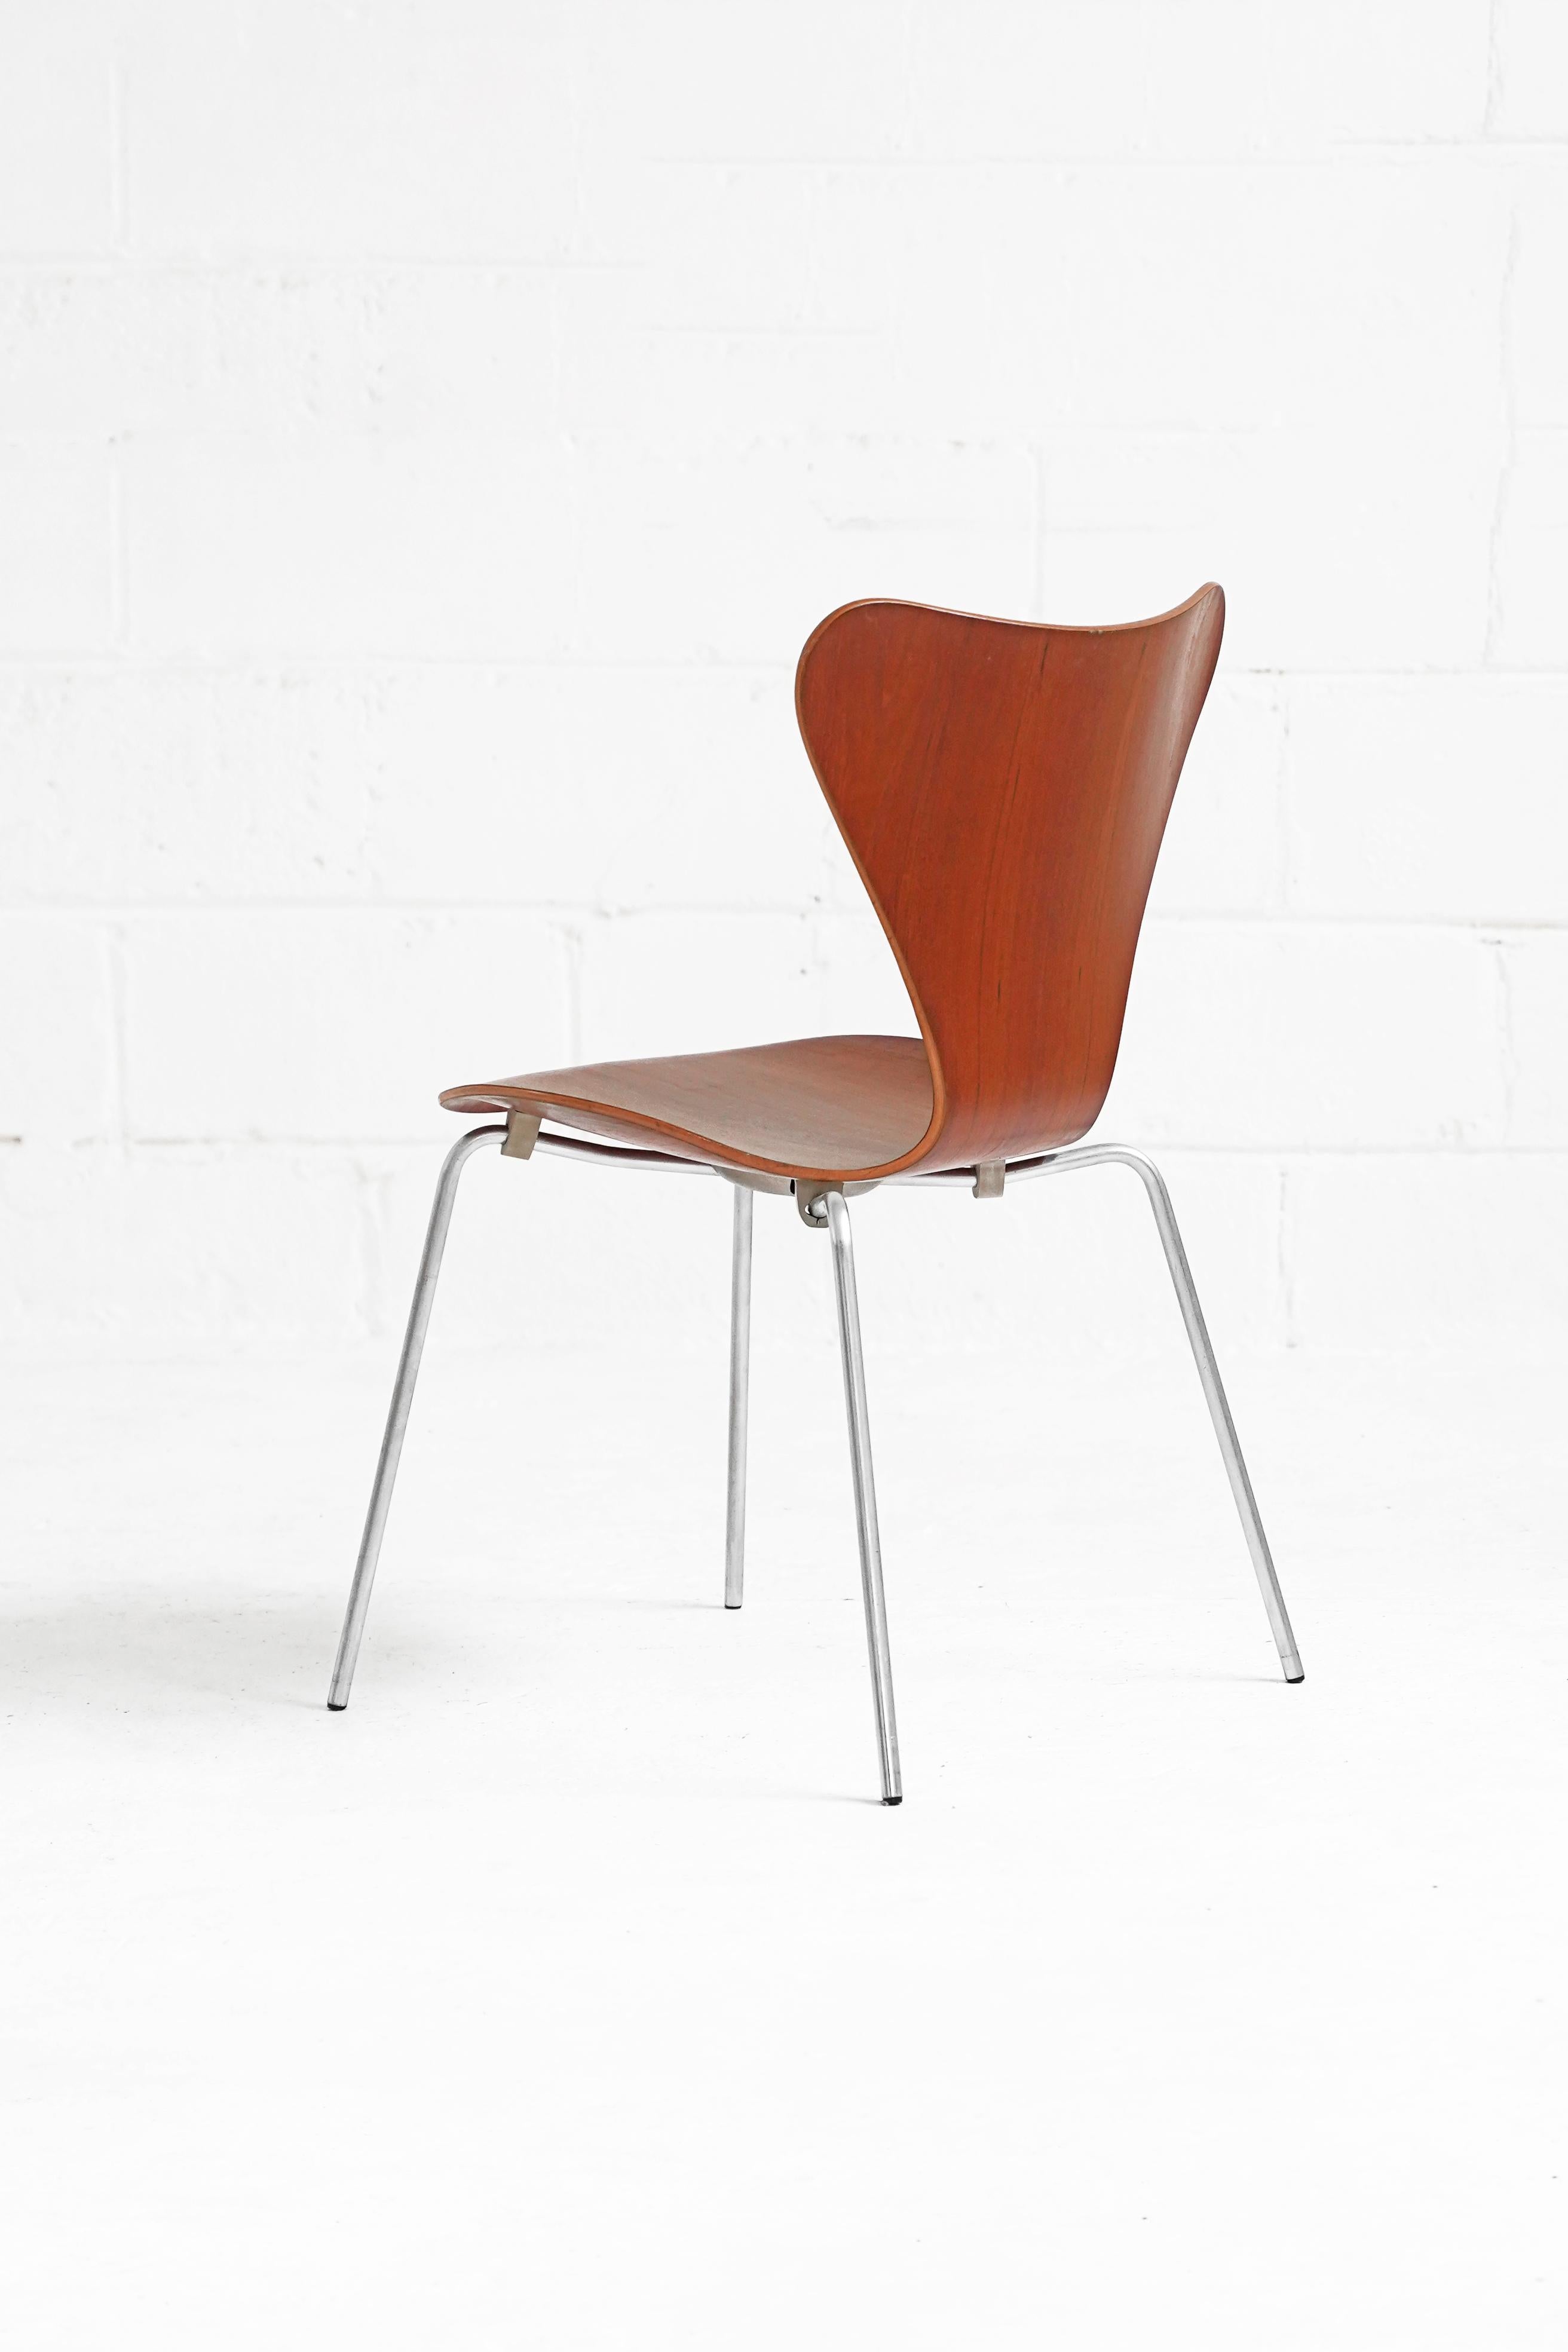 Mid-Century Modern Set of 4 Series 7 Butterfly Chairs in Teak by Arne Jacobsen for Fritz Hansen